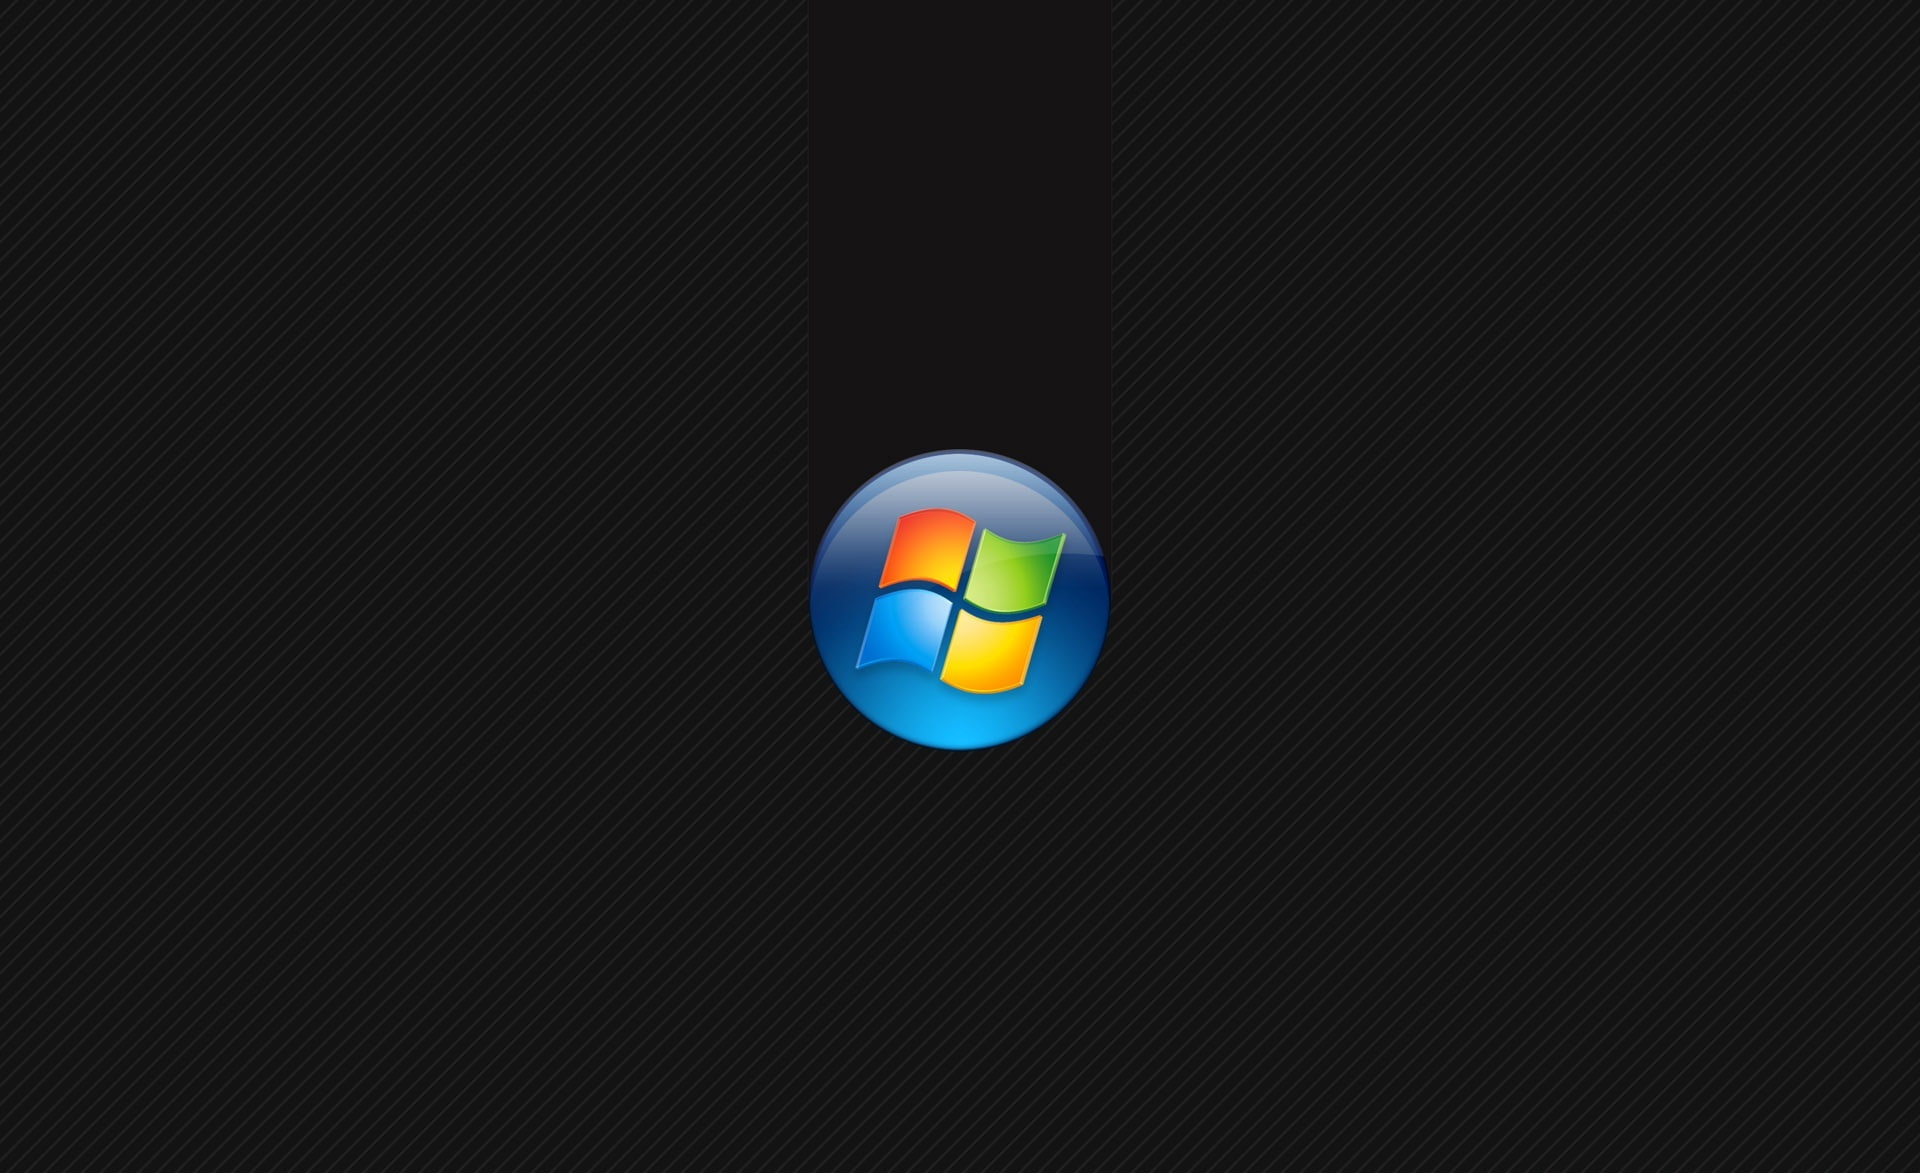 Windows Vista Aero 23, Windows digital wallpaper, no people, indoors